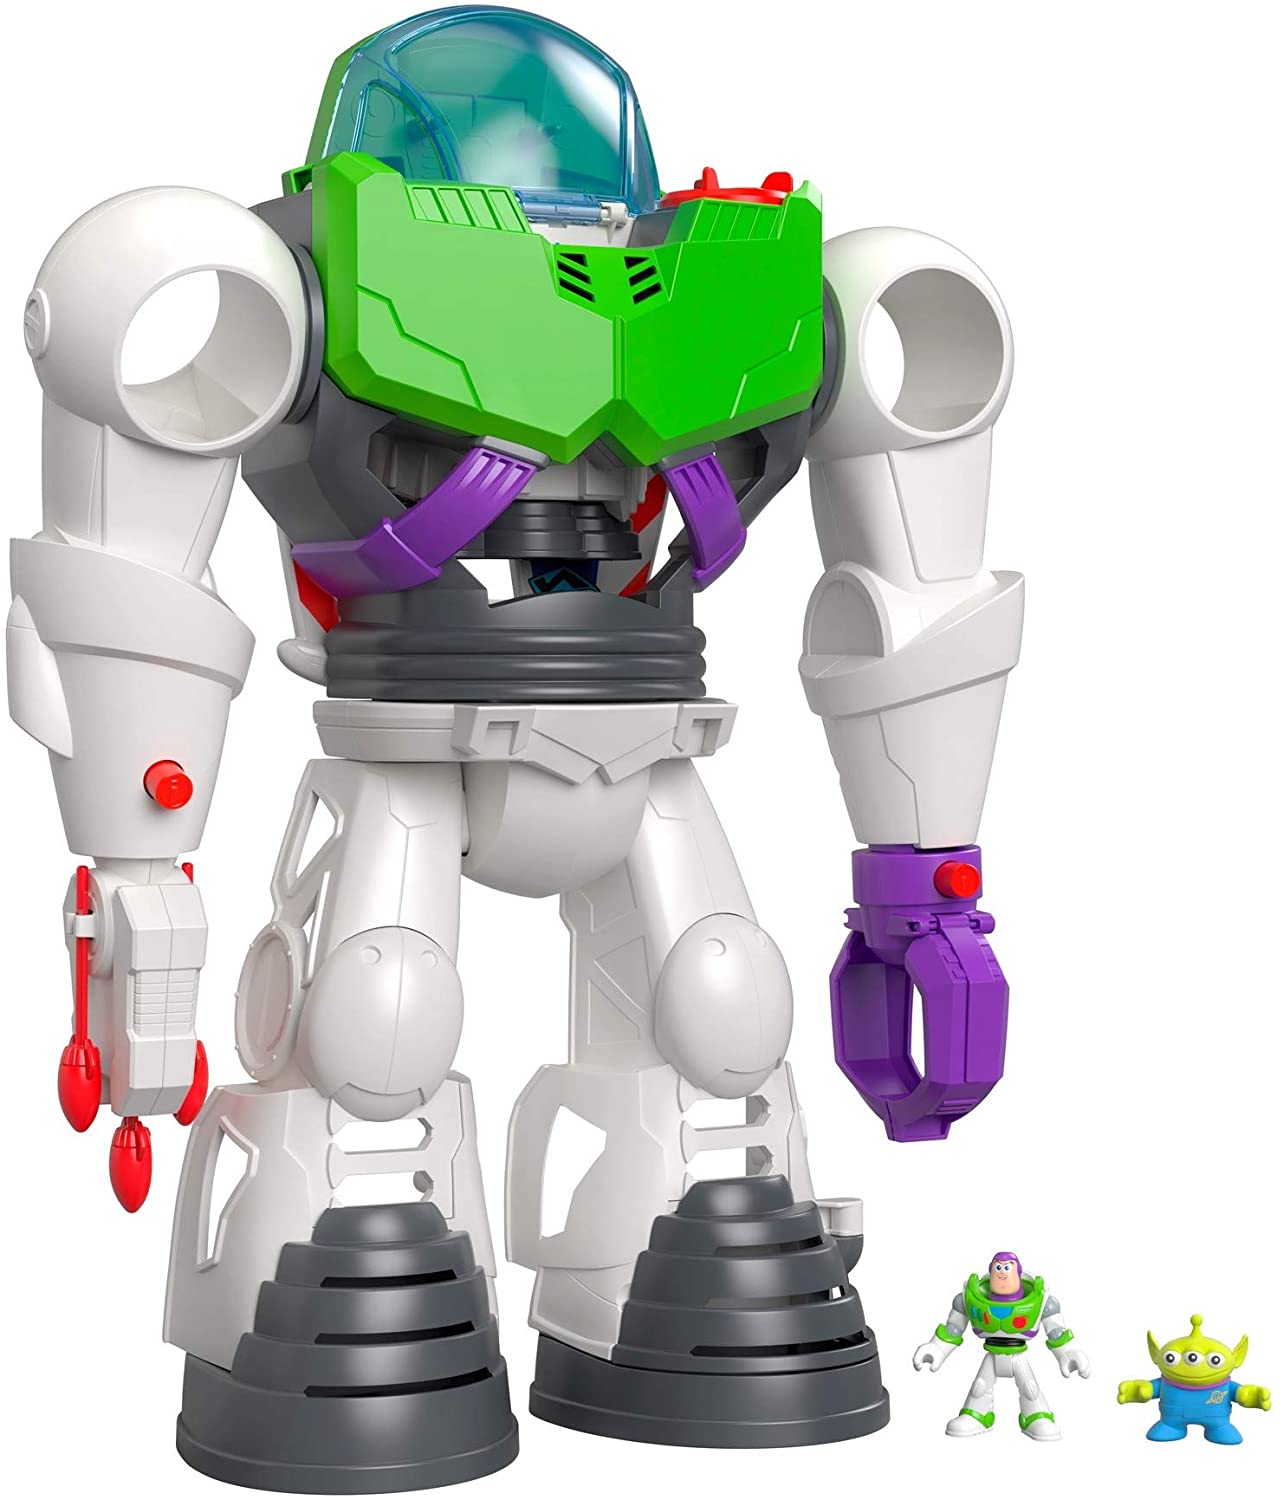 Toy Story Buzz Lightyear Robot Fisher Price Original